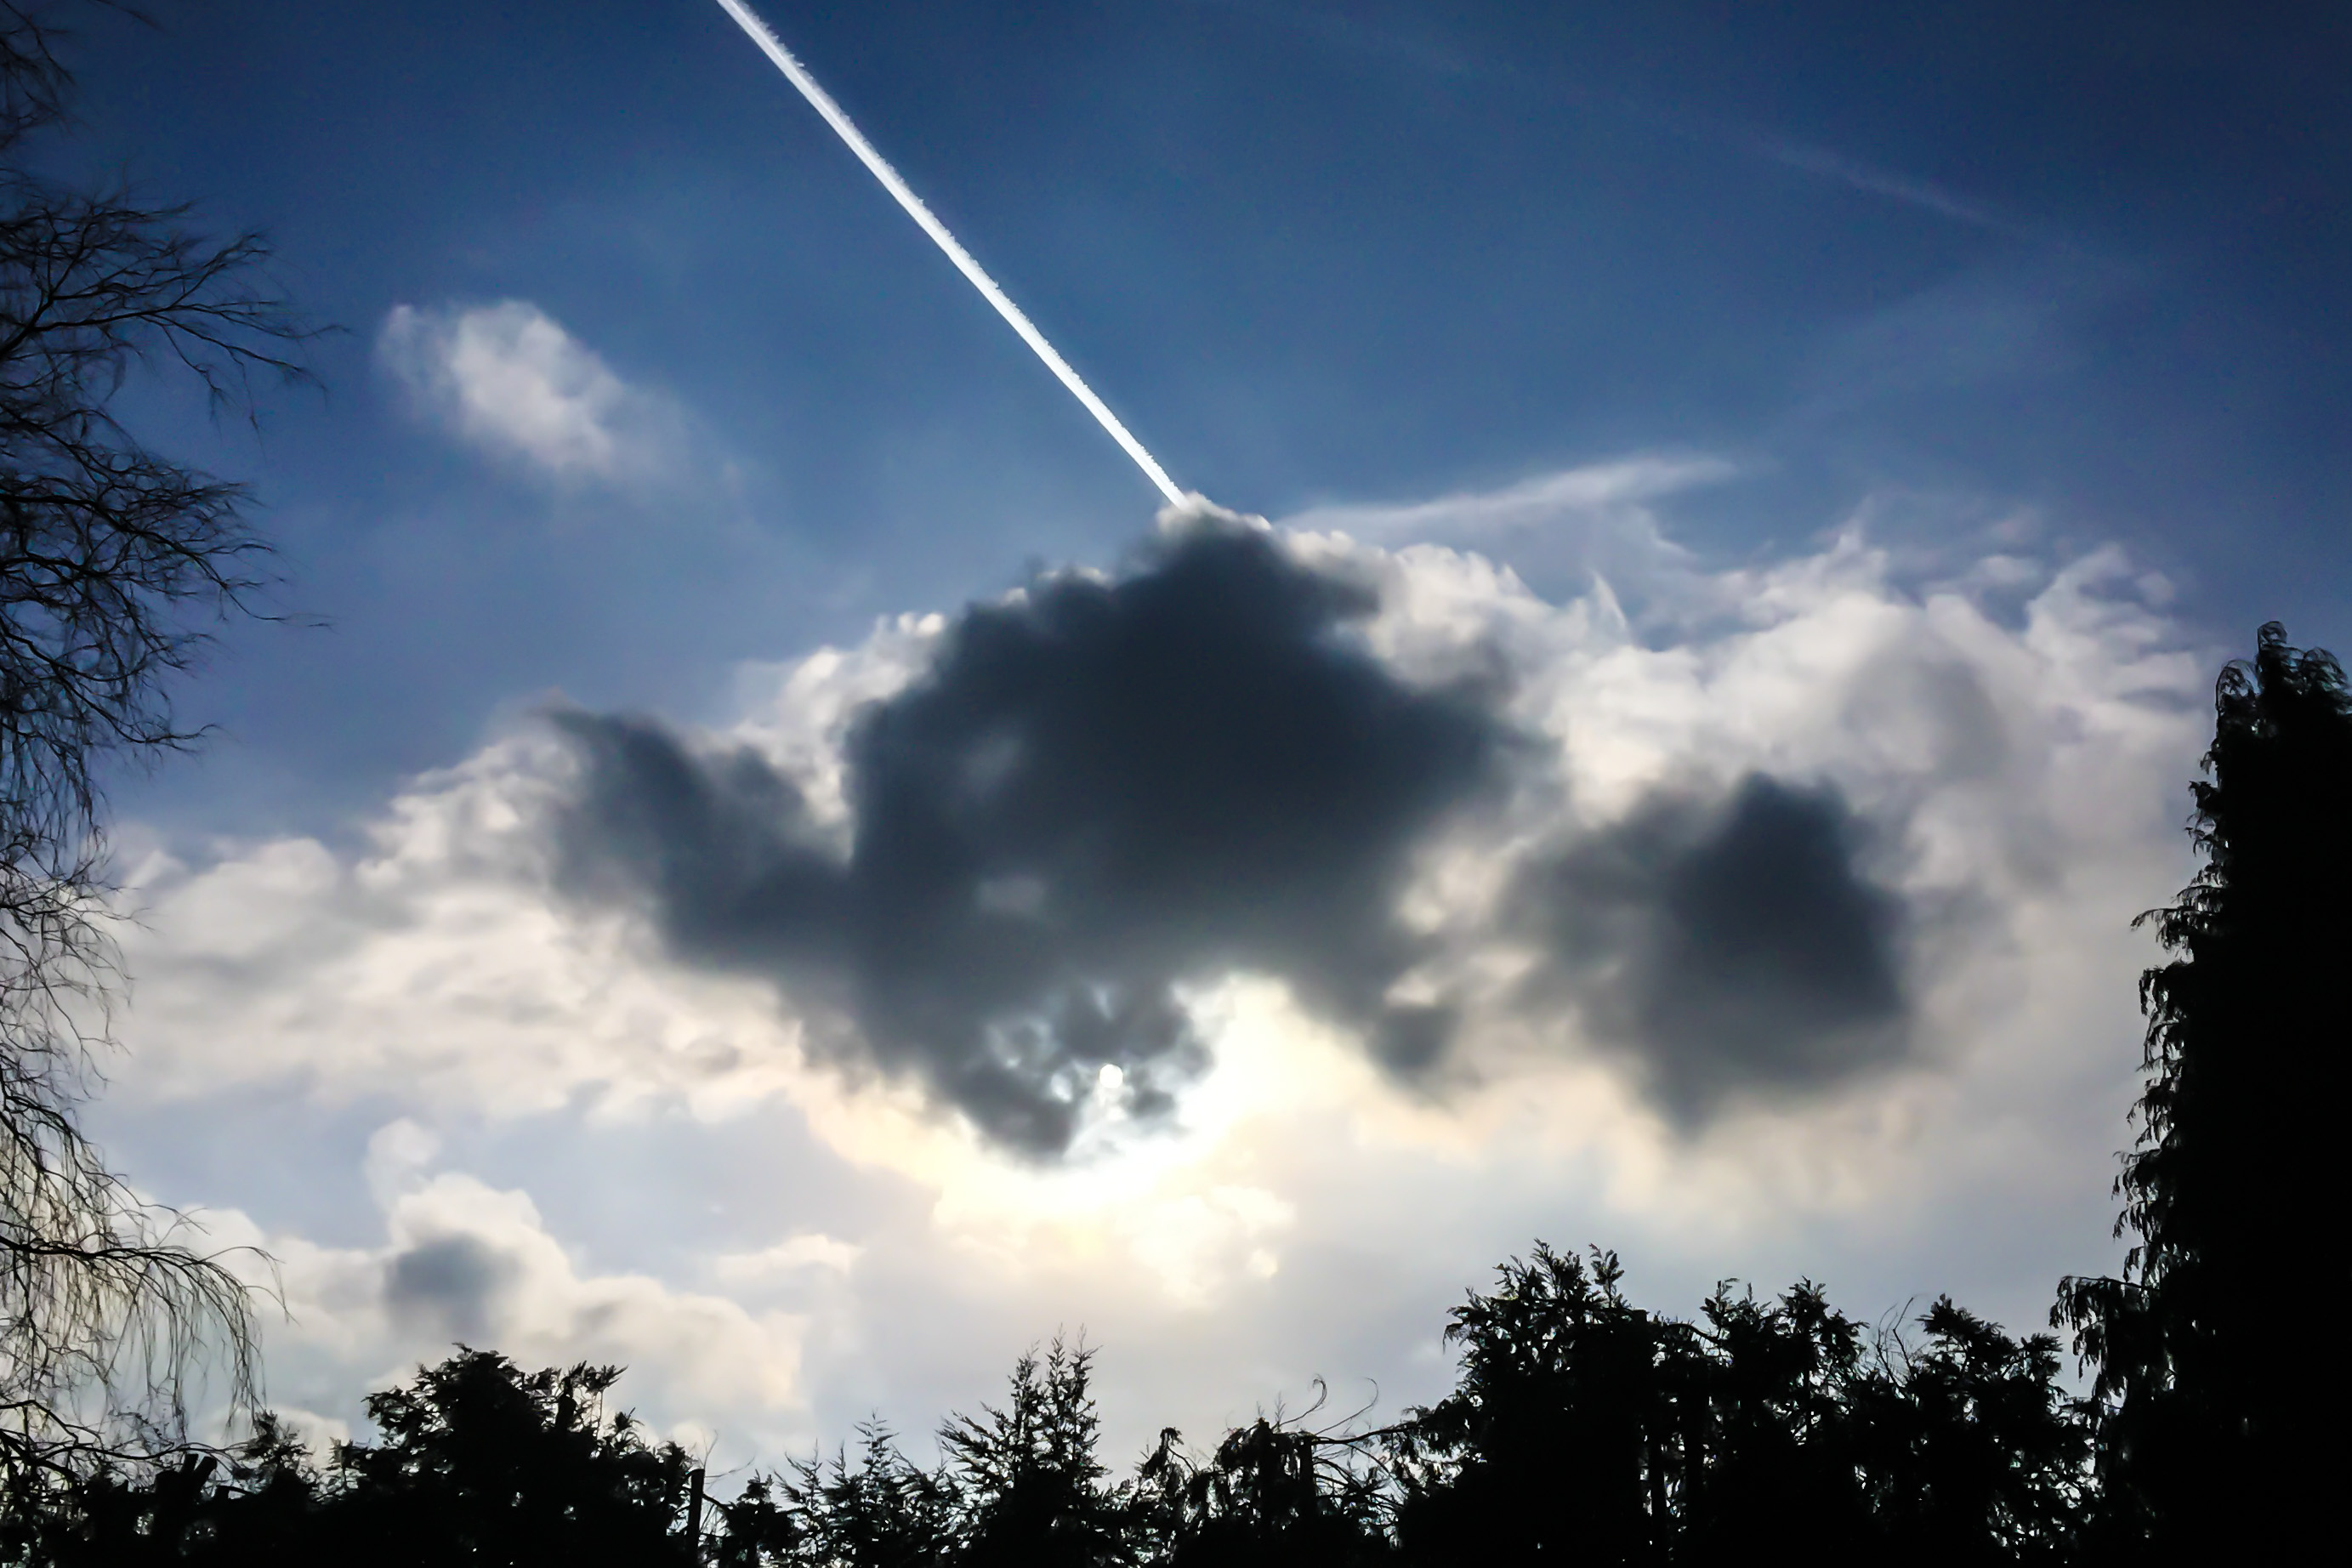 Day 137.2 – God walking (a cloud)